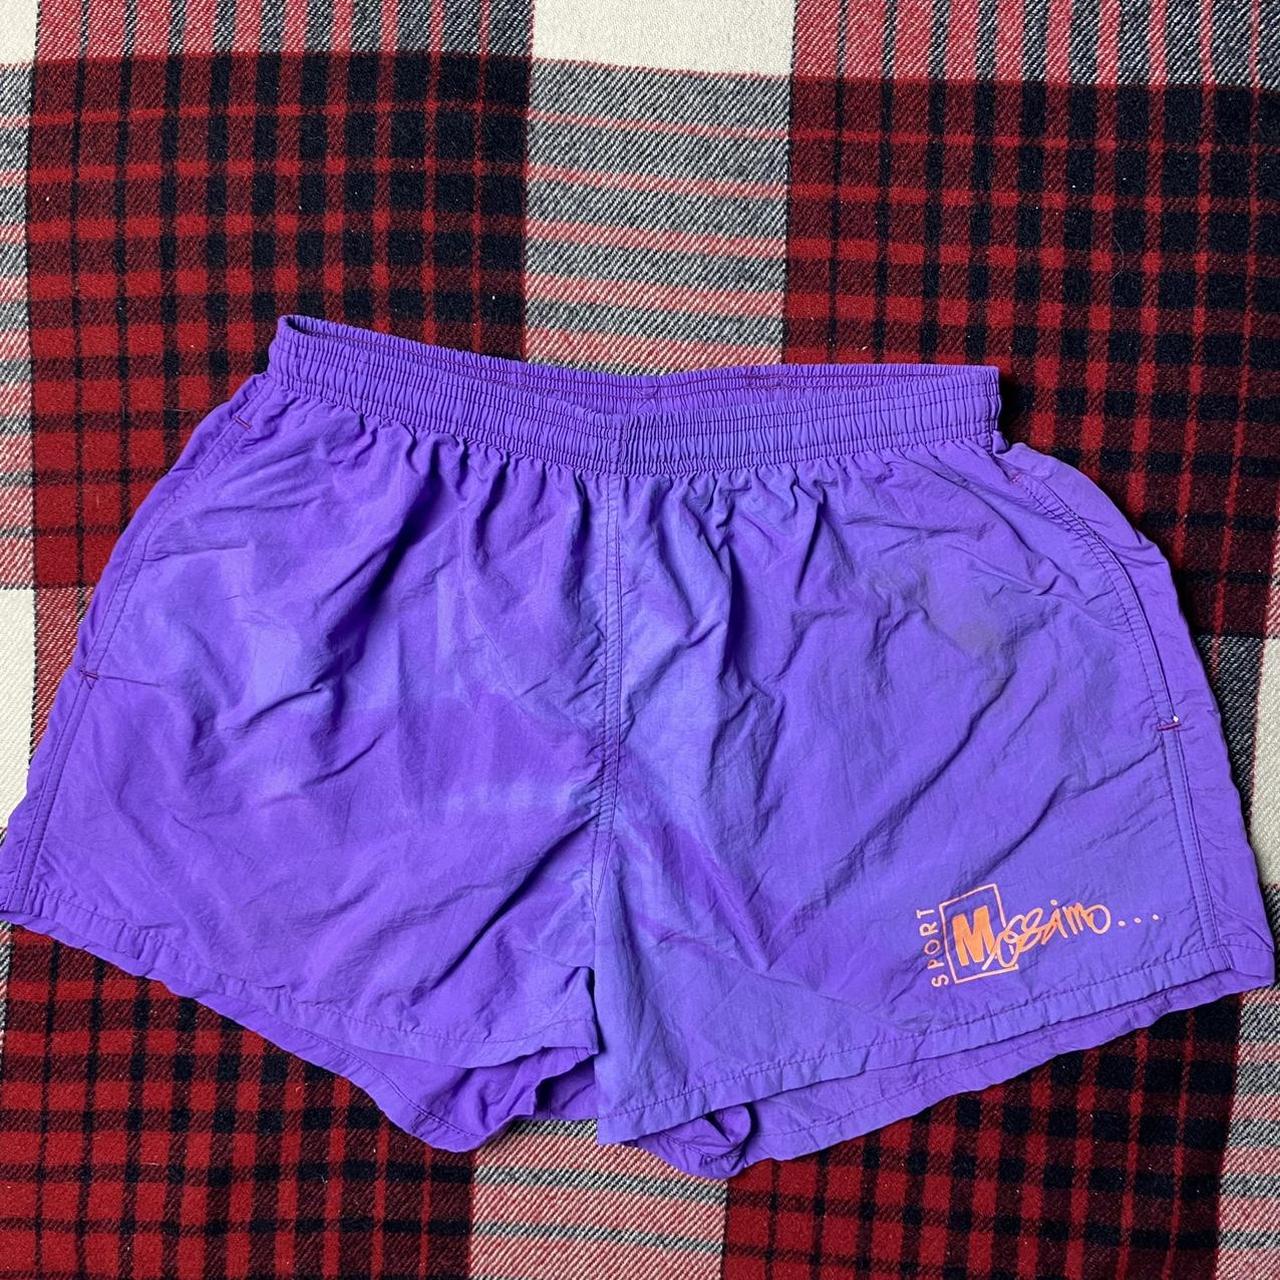 Mossimo Men's Purple Shorts